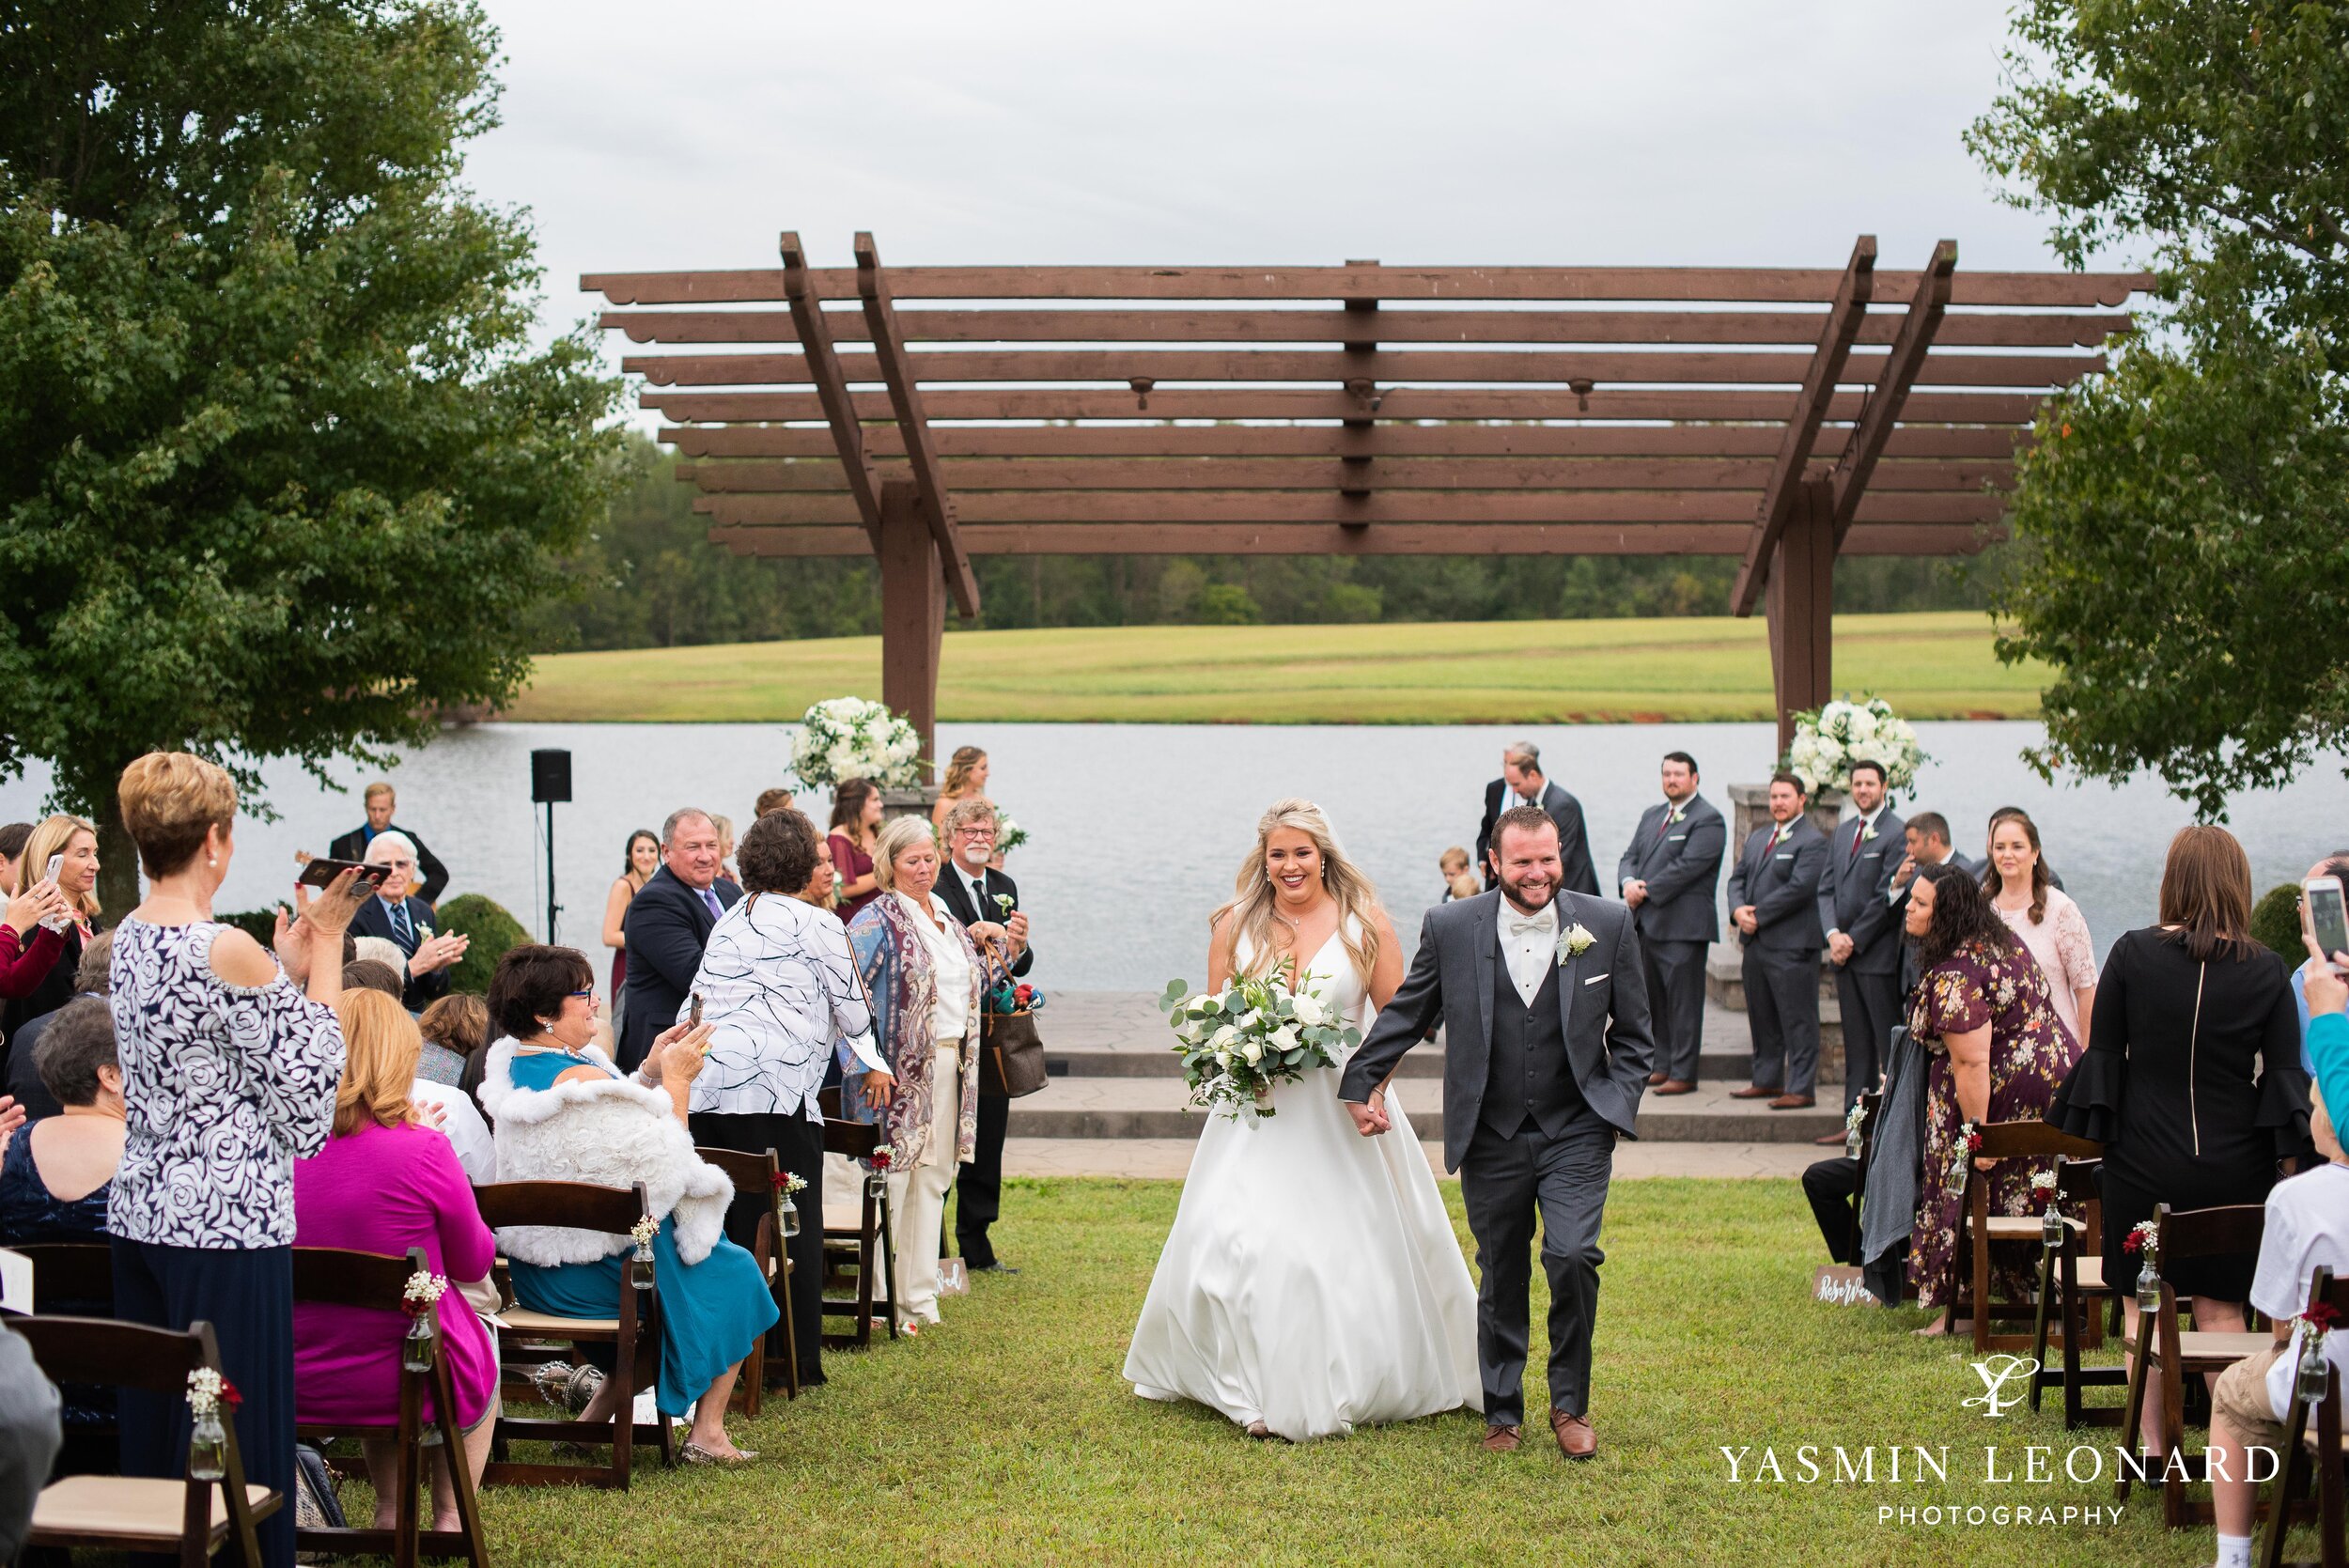 Dan and Nicole - October 5, 2019 - Adaumont - Yasmin Leonard Photography - Horse Carriage Wedding - Adaumont Wedding - High Point Wedding Photographer - Fall Wedding - Fall Wedding Colors-33.jpg